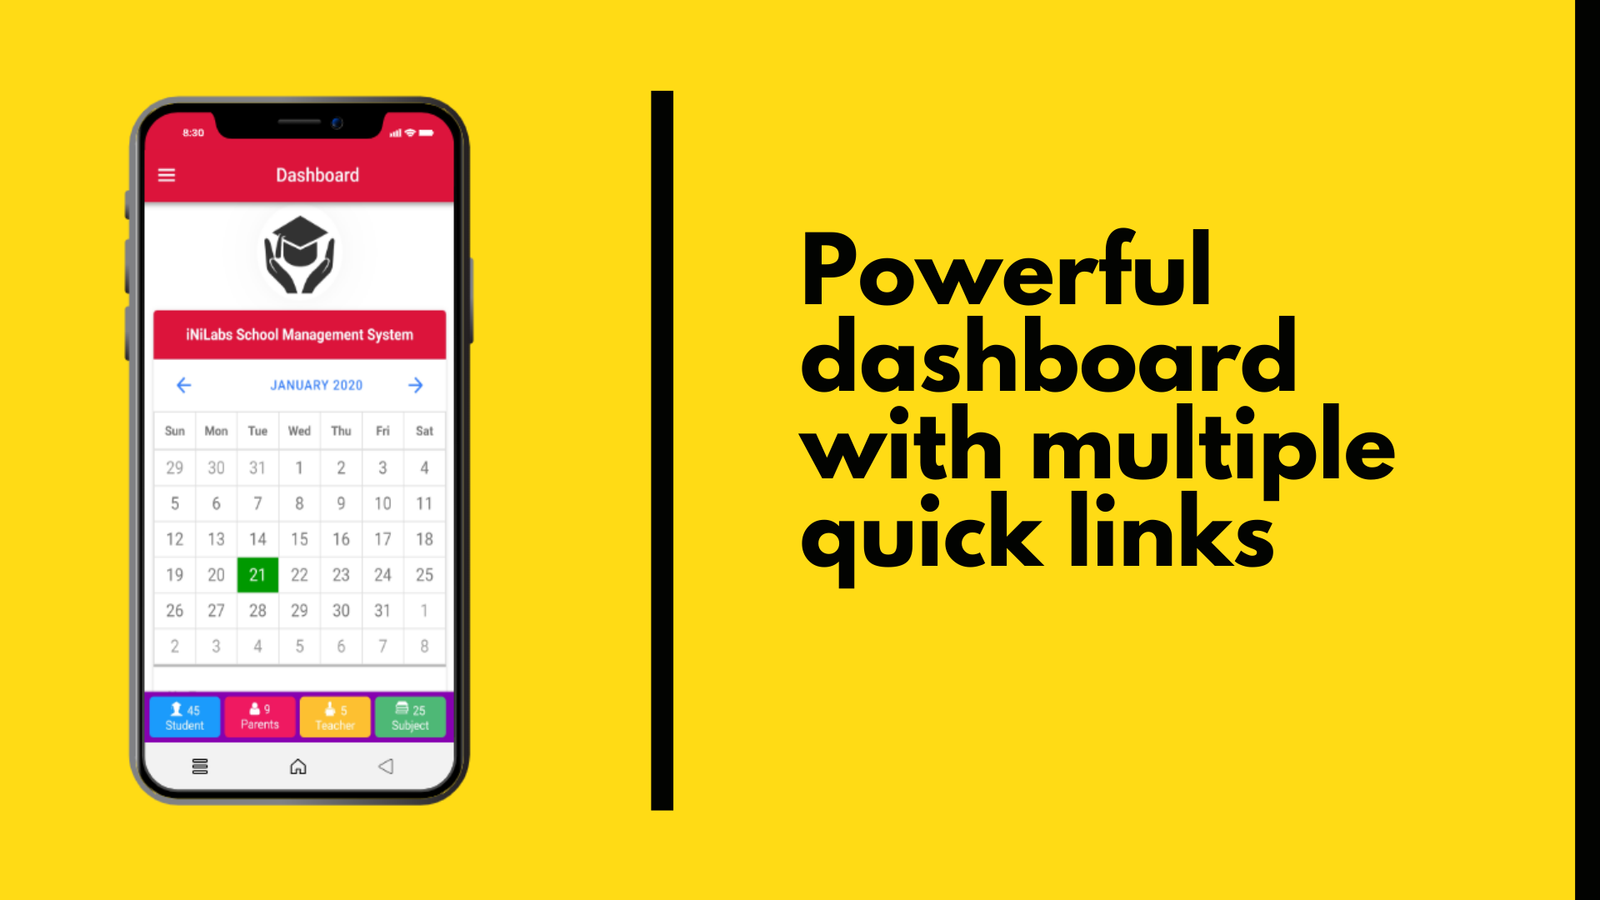 inilabs school app powerful dashboard